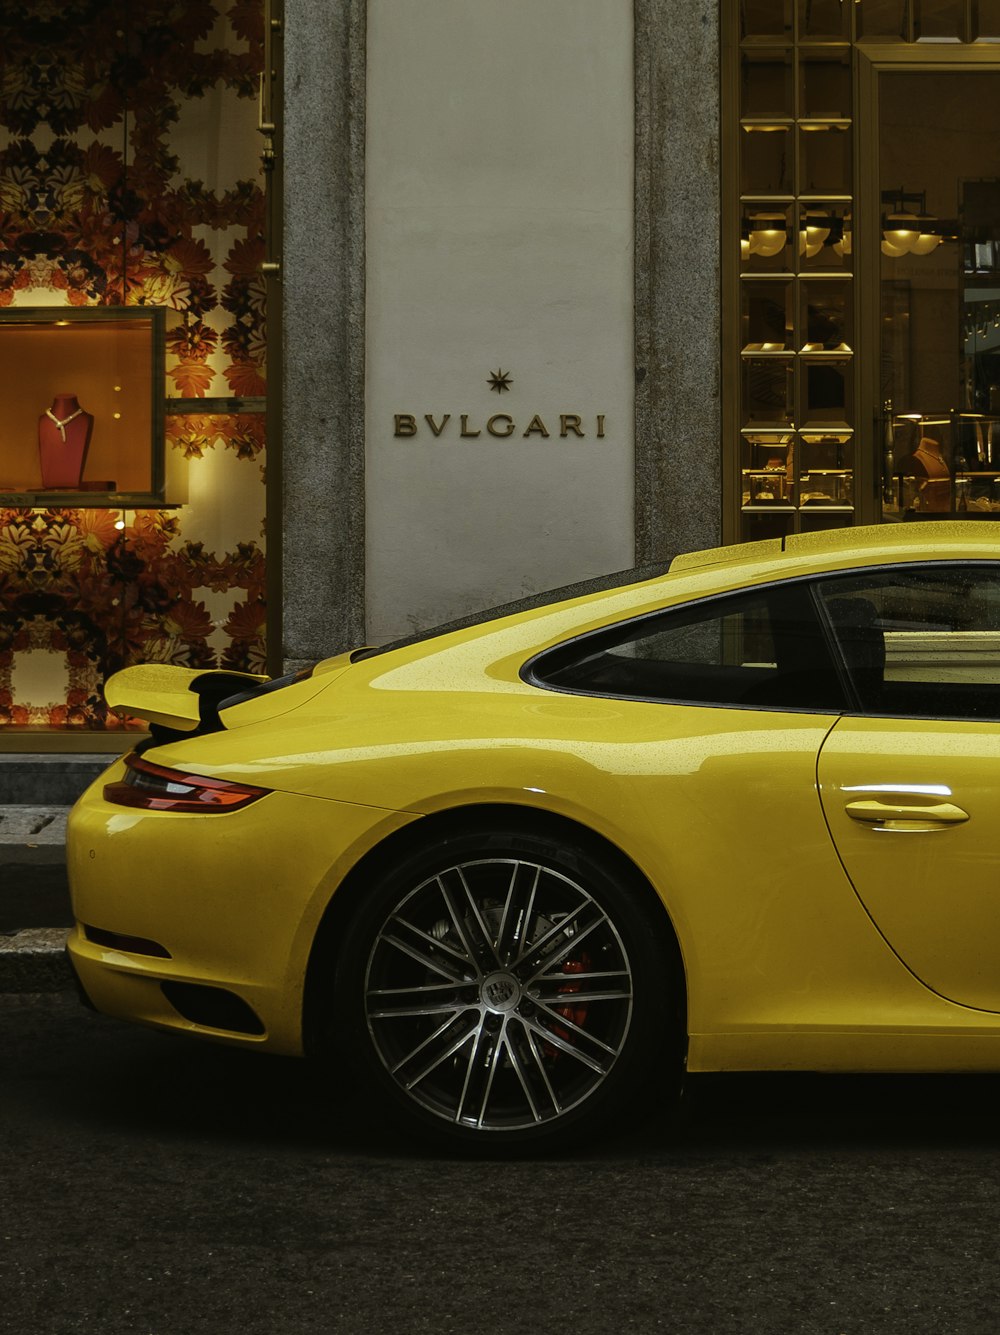 Porsche amarelo 911 estacionado perto do edifício